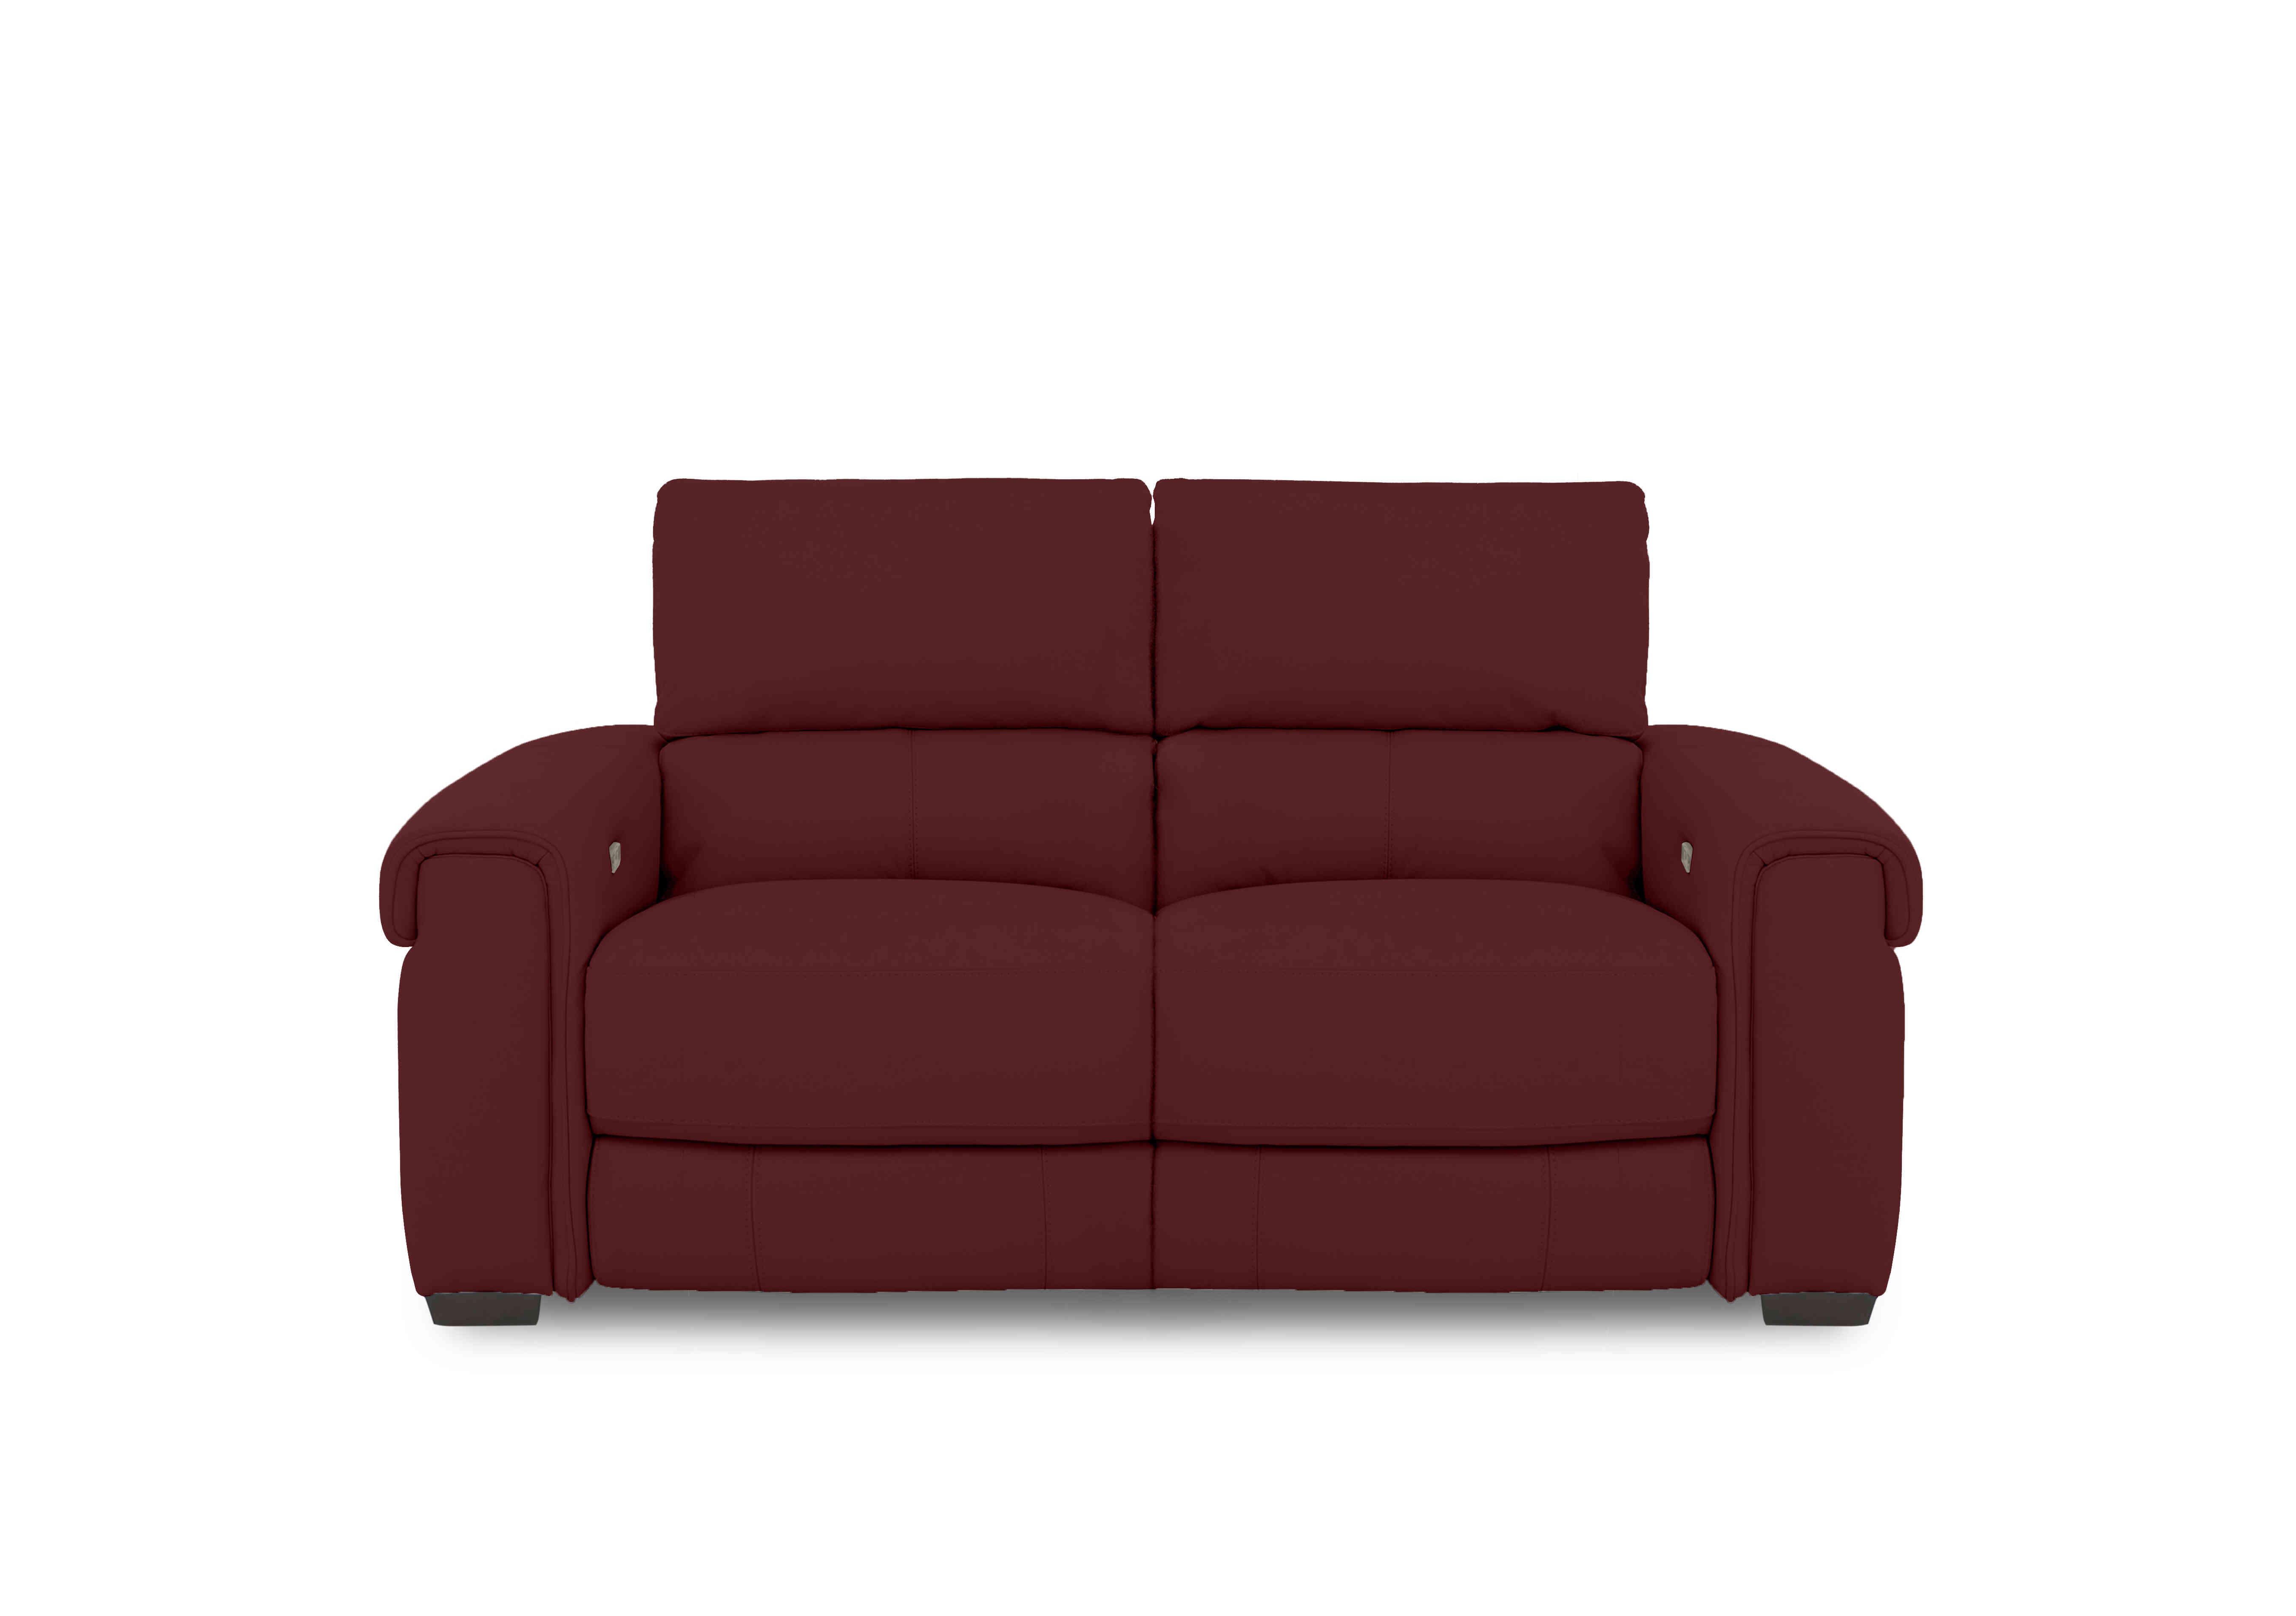 Nixon Fabric 2 Seater Sofa in Fab-Meg-R65 Burgundy on Furniture Village